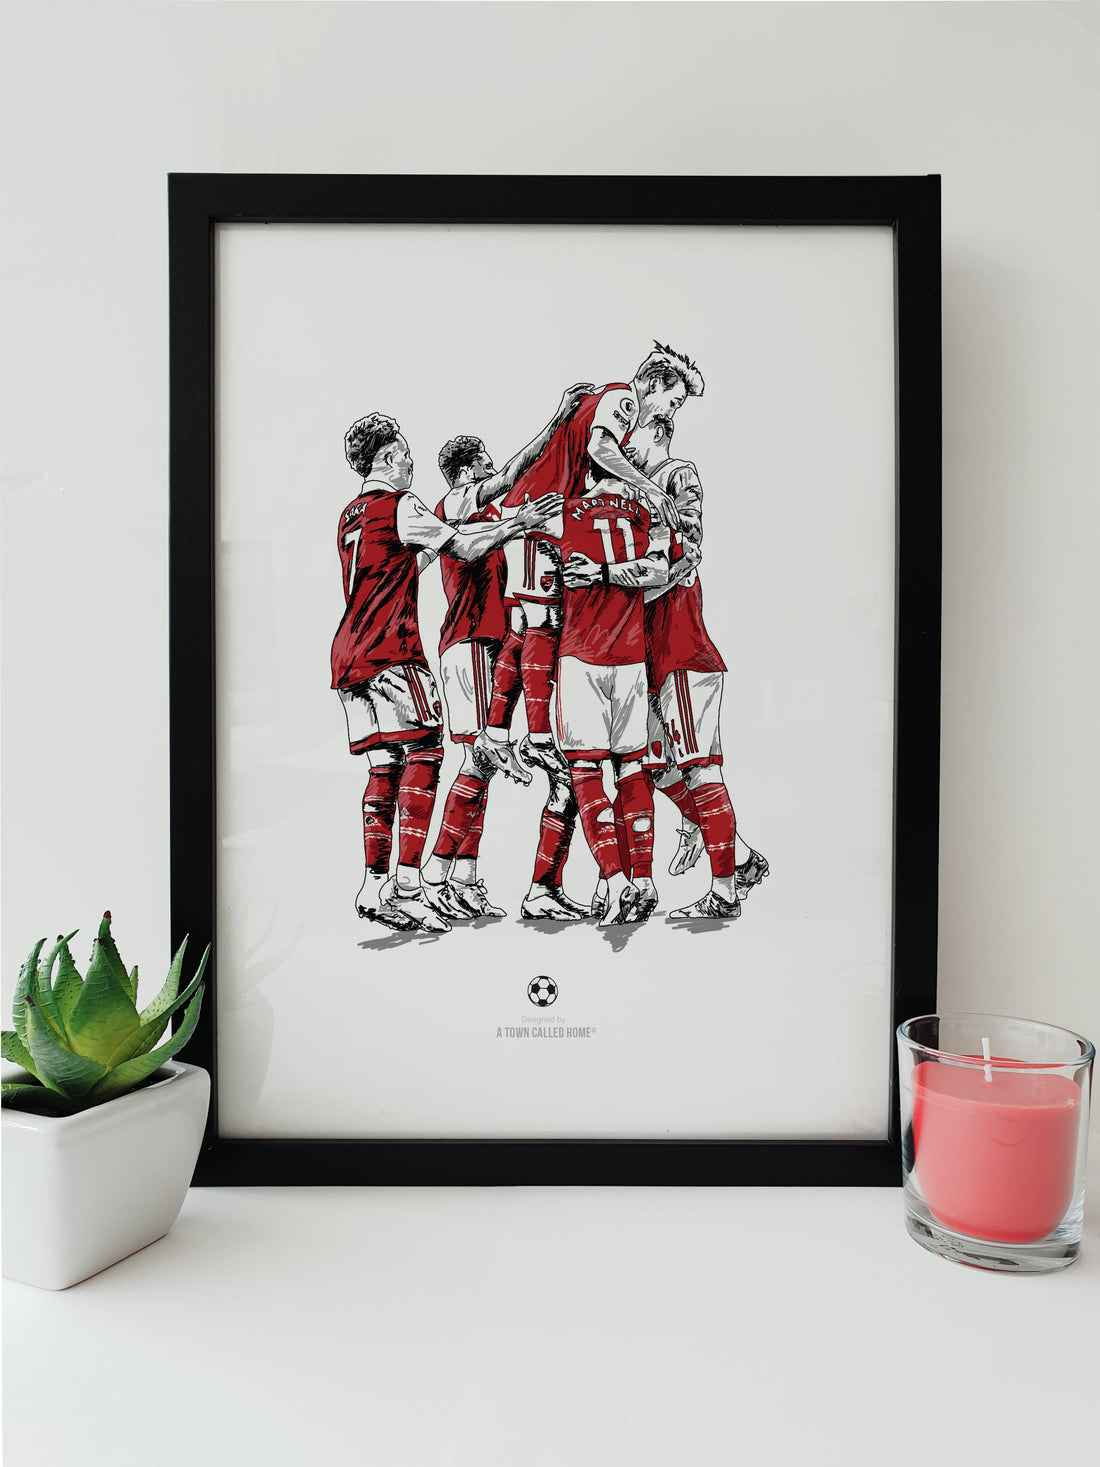 Arsenal football club players goal celebration artwork, poster print featuring gabriel martinelli Martin Ødegaard Bukayo Saka